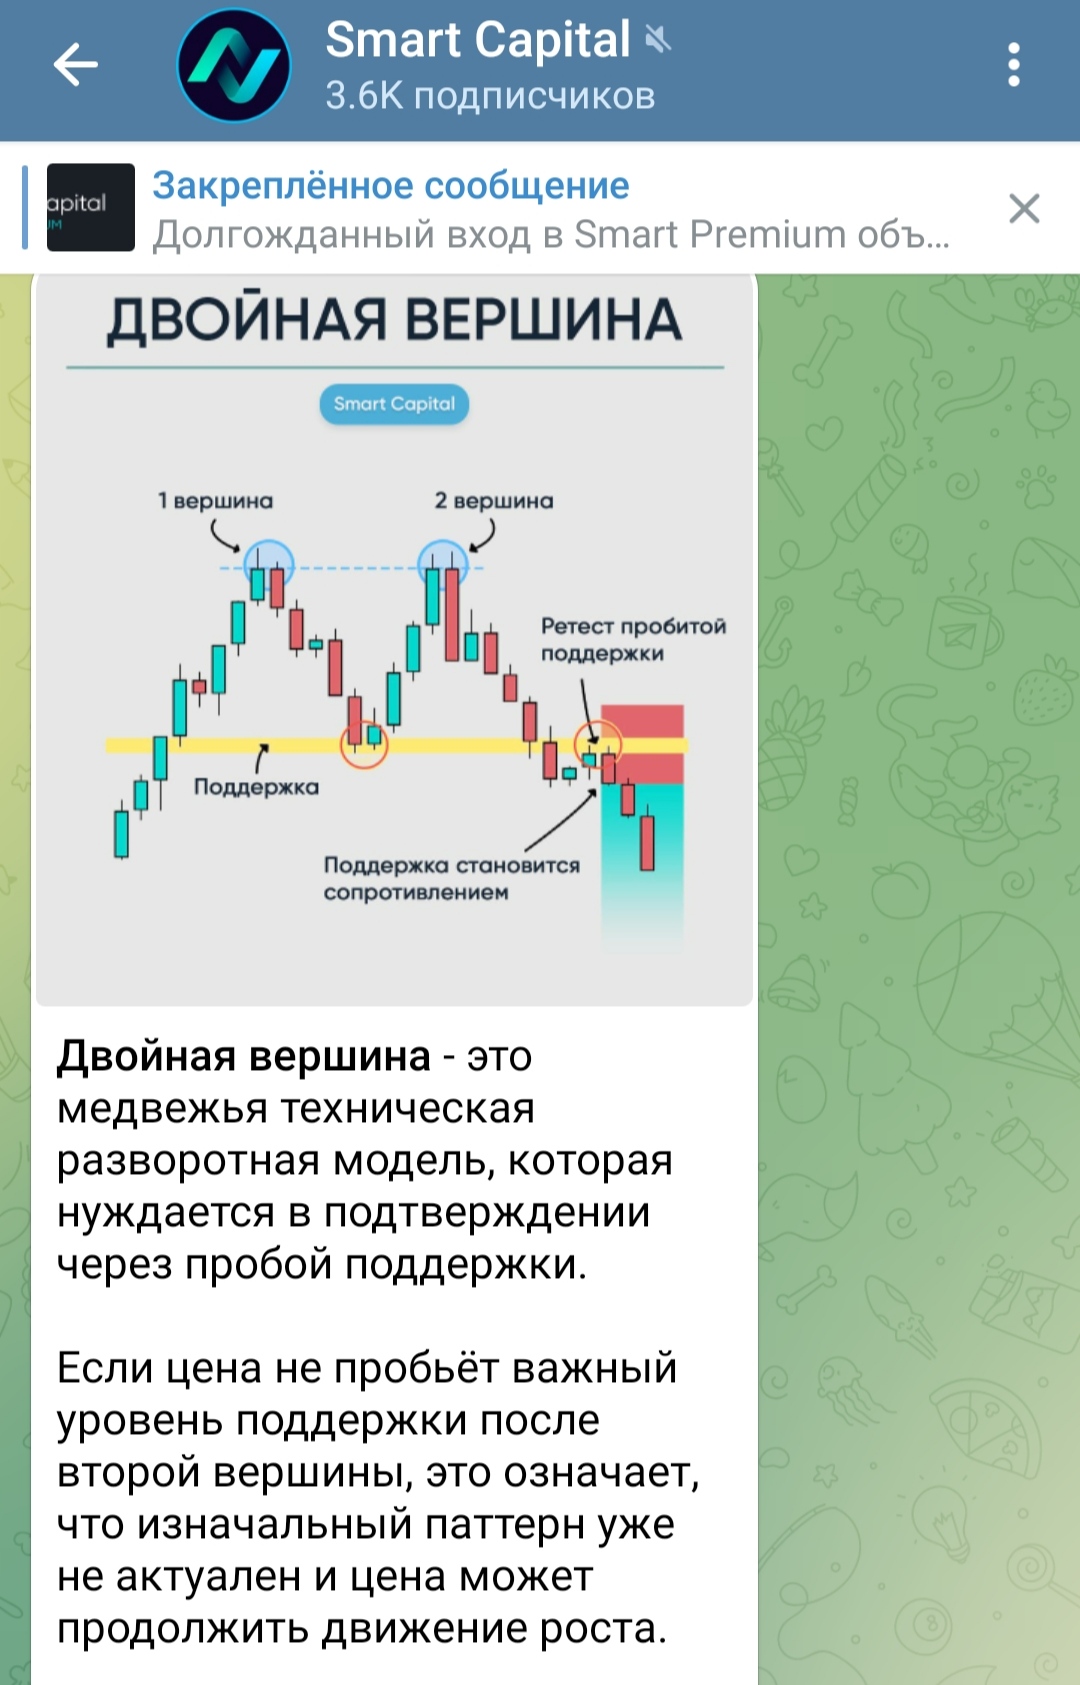 Smart Capital Trading телеграм пост